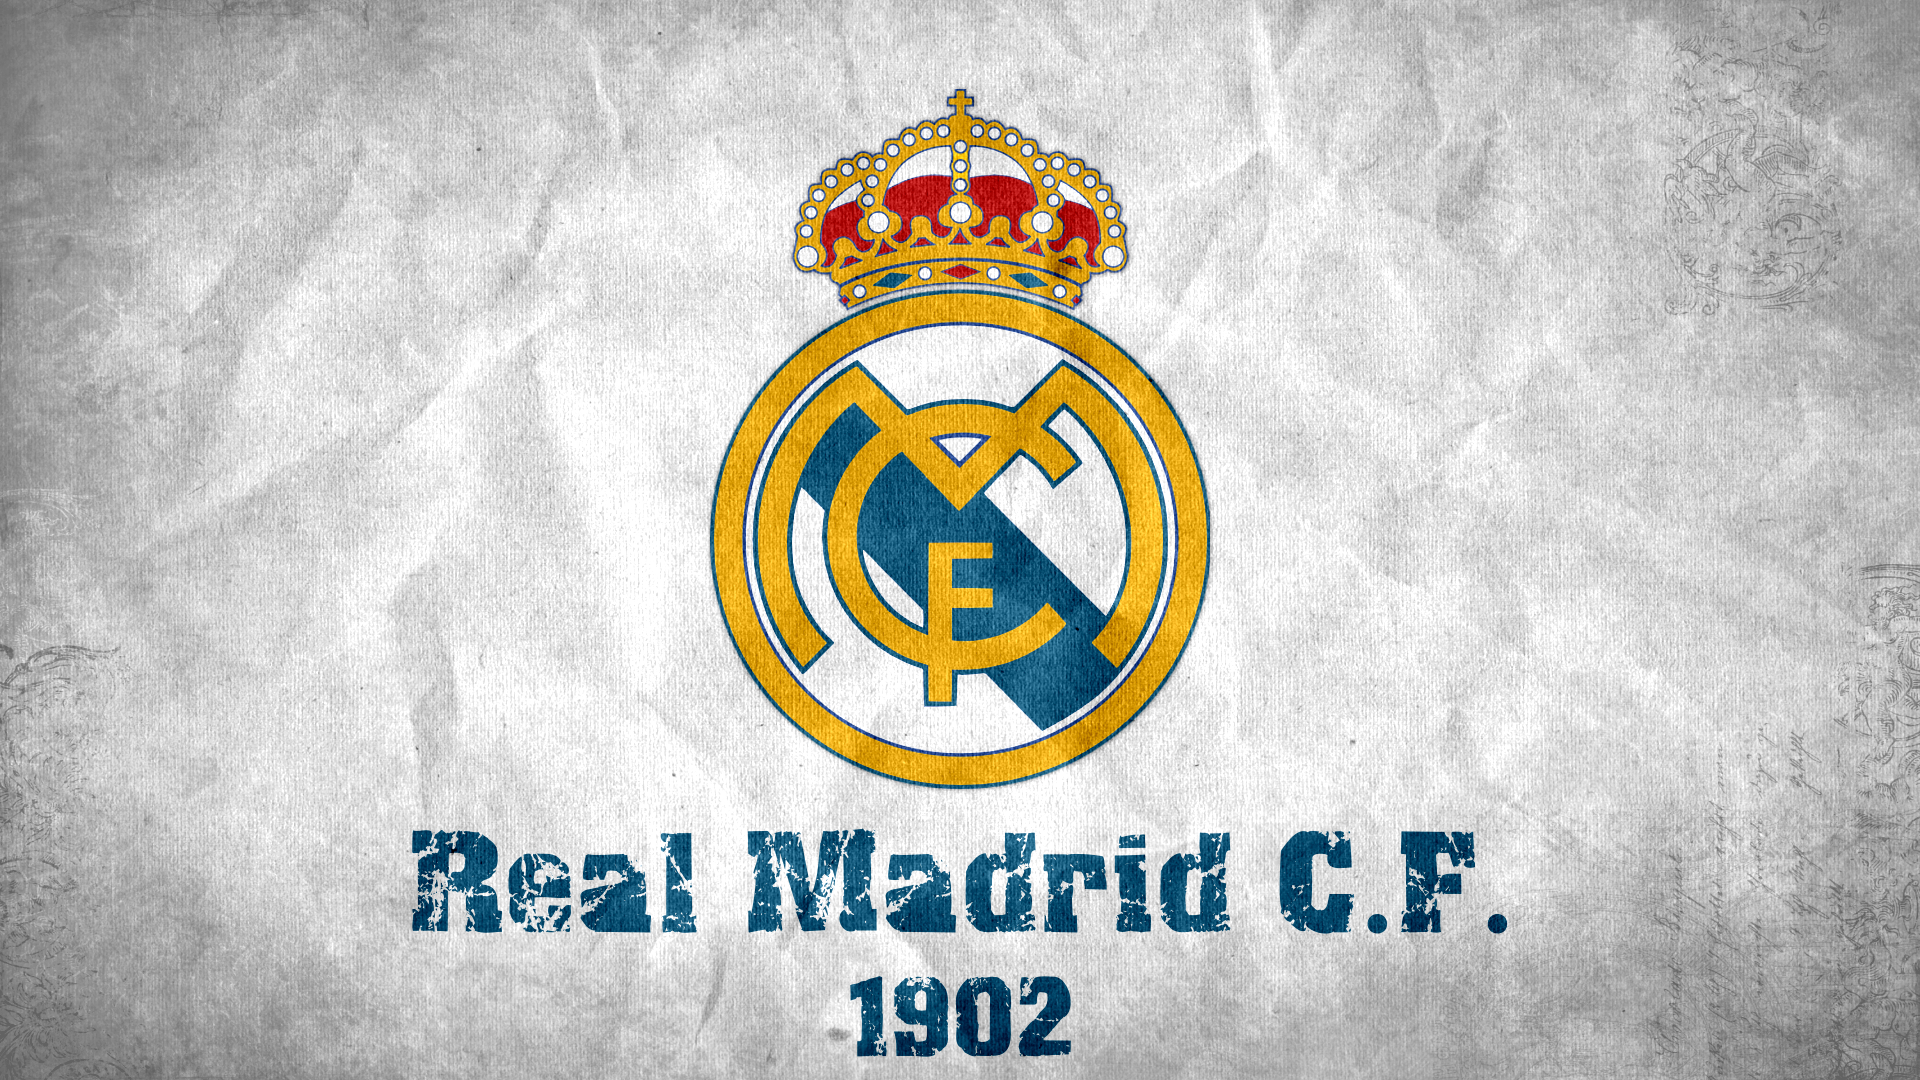 Real Madrid Wallpaper HD Free Download PixelsTalkNet